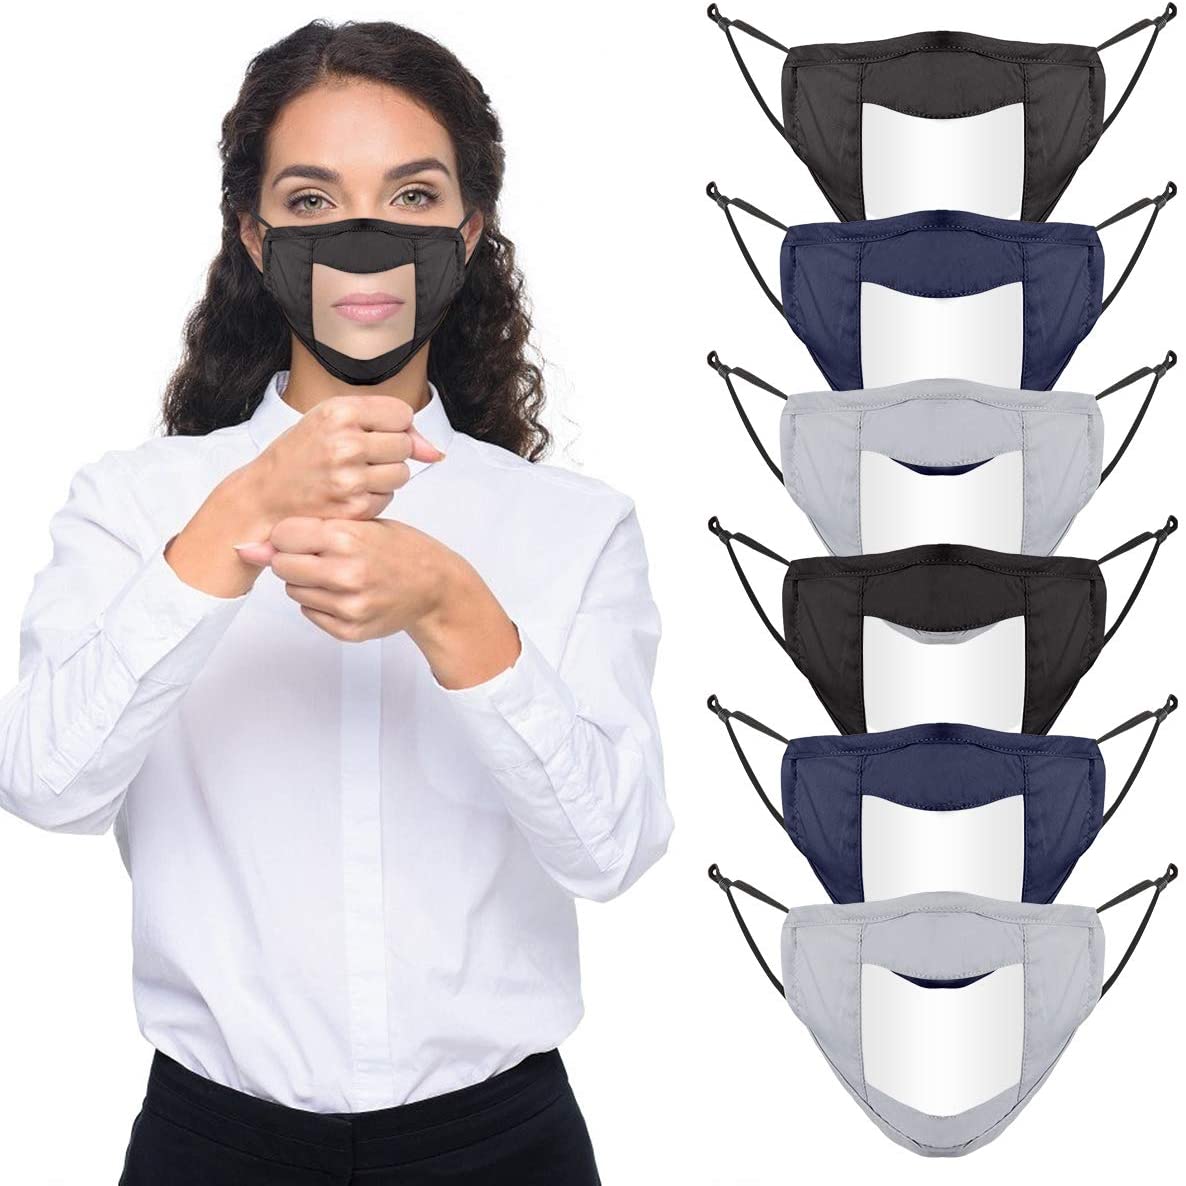 Amazon Paid Link -Transparent masks - I am an affiliate